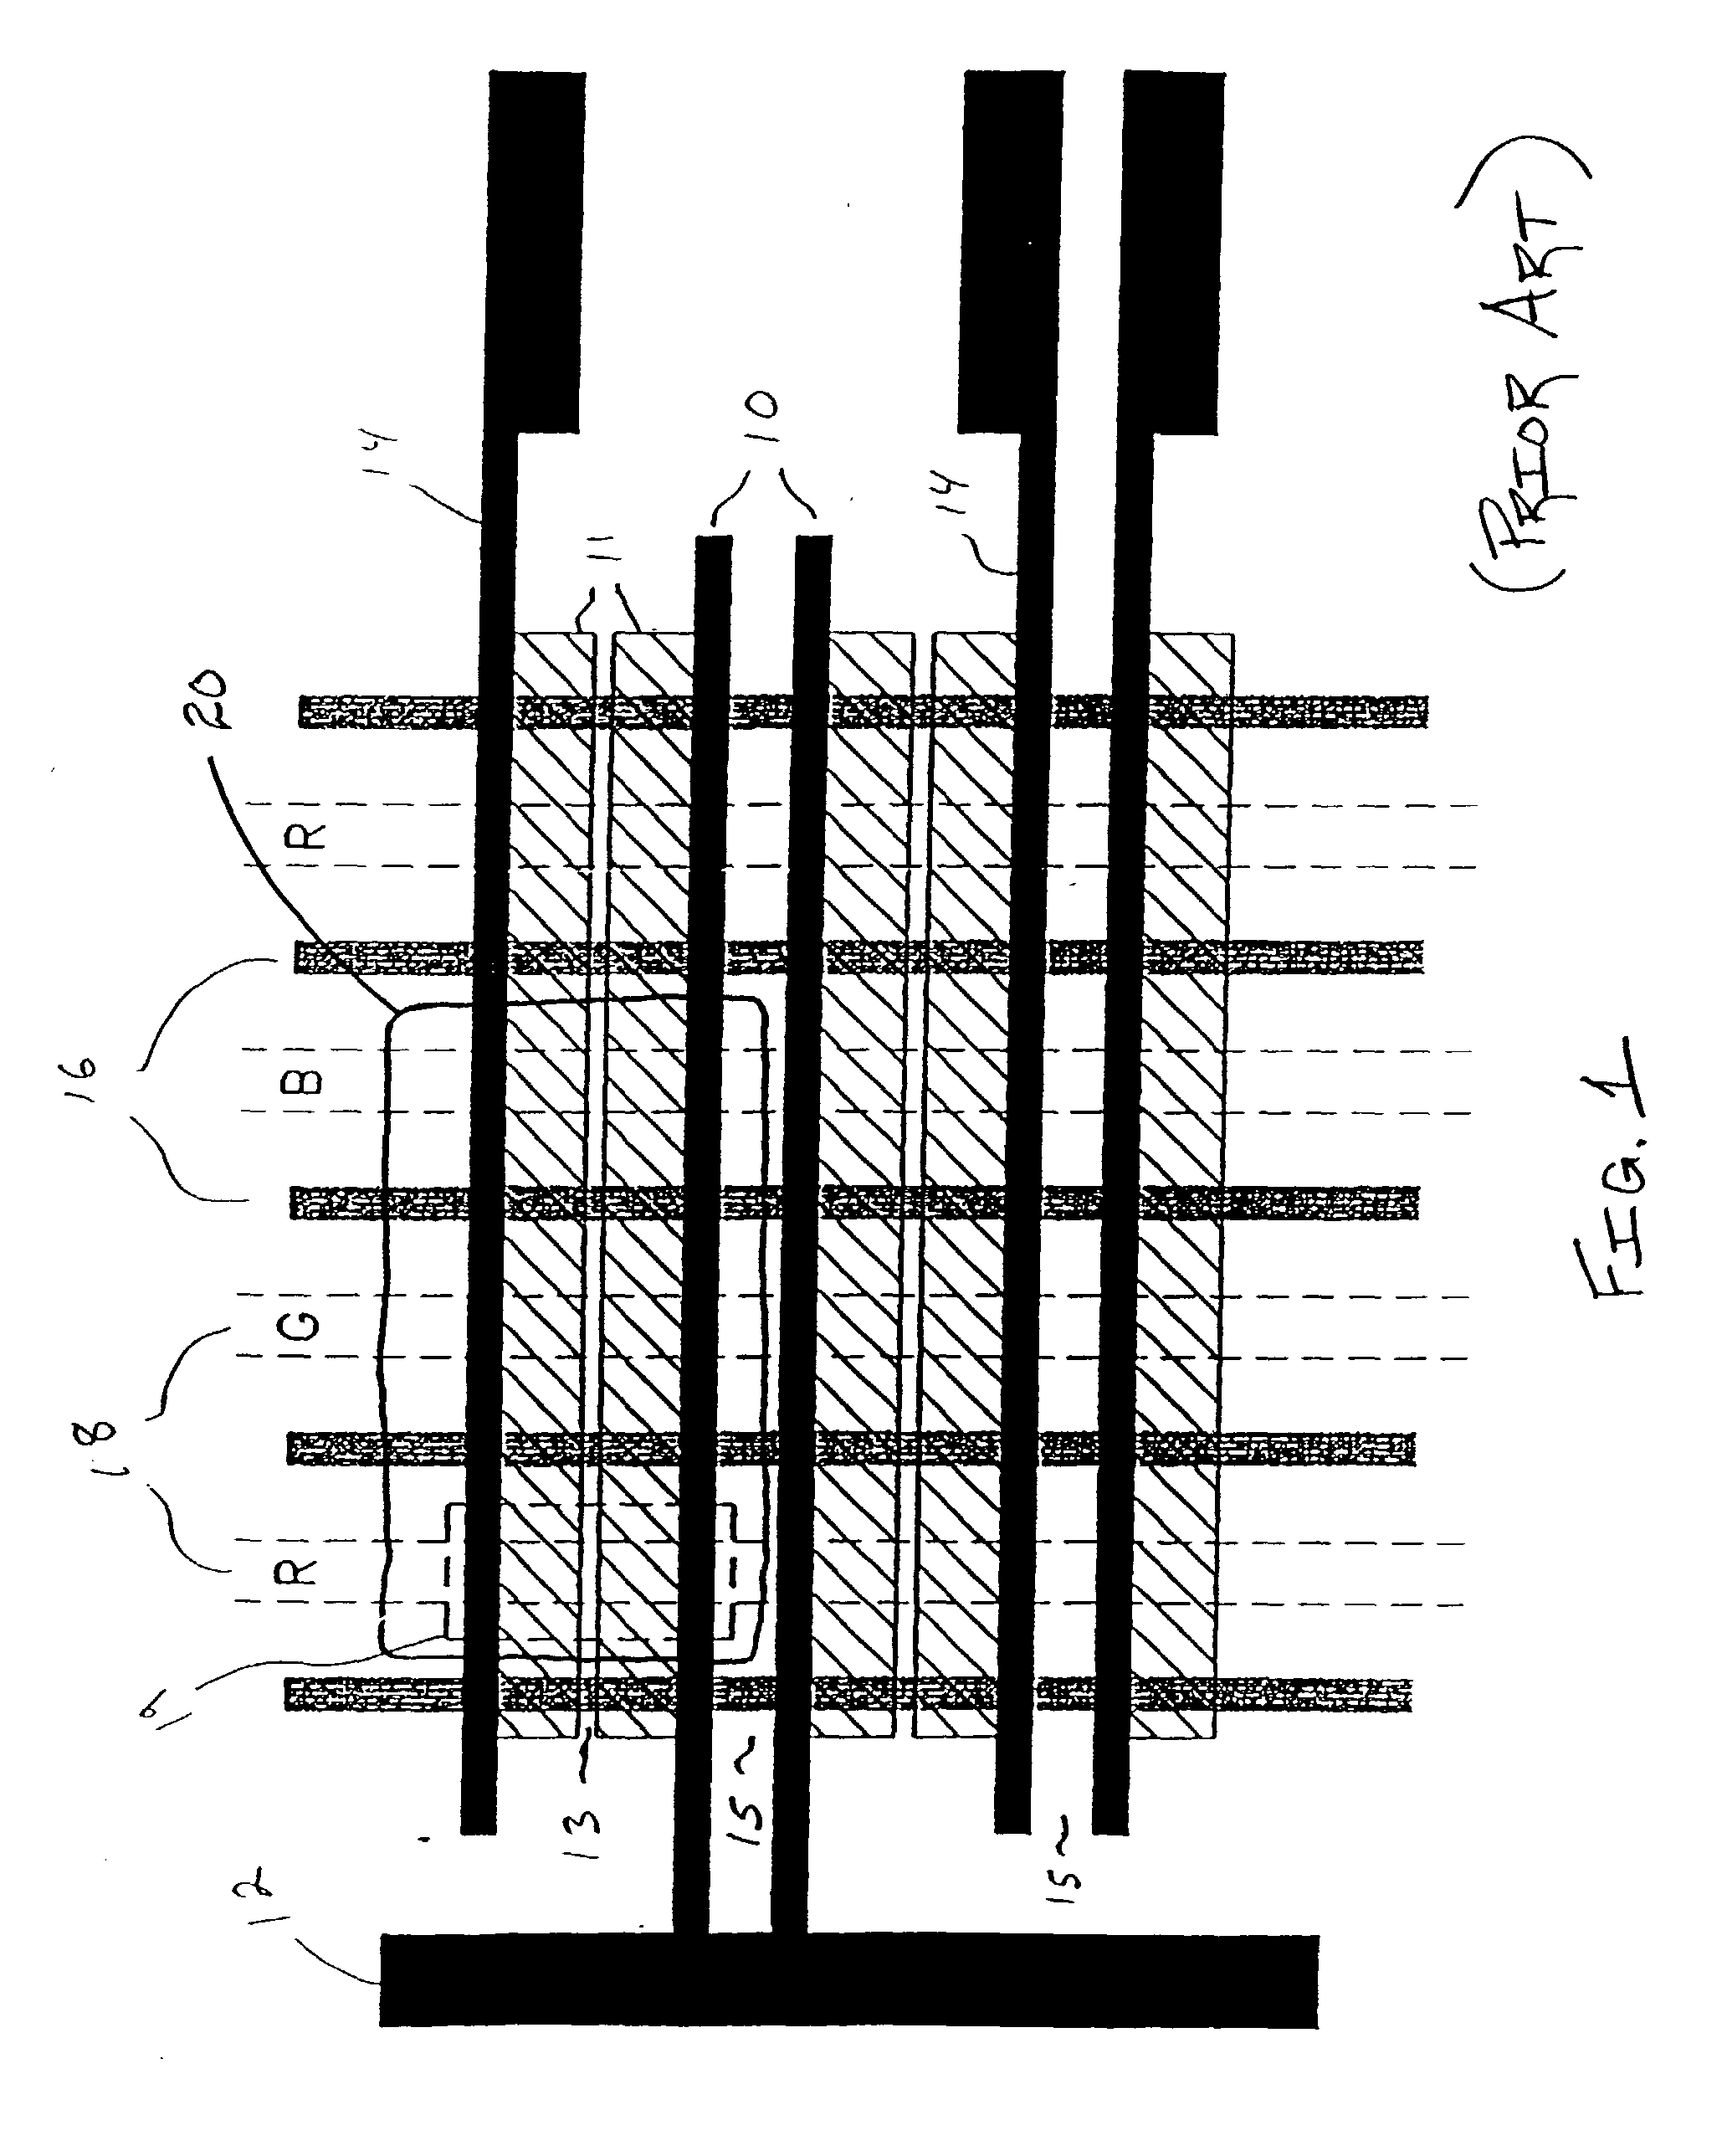 Suppression of vertical crosstalk in a plasma display panel